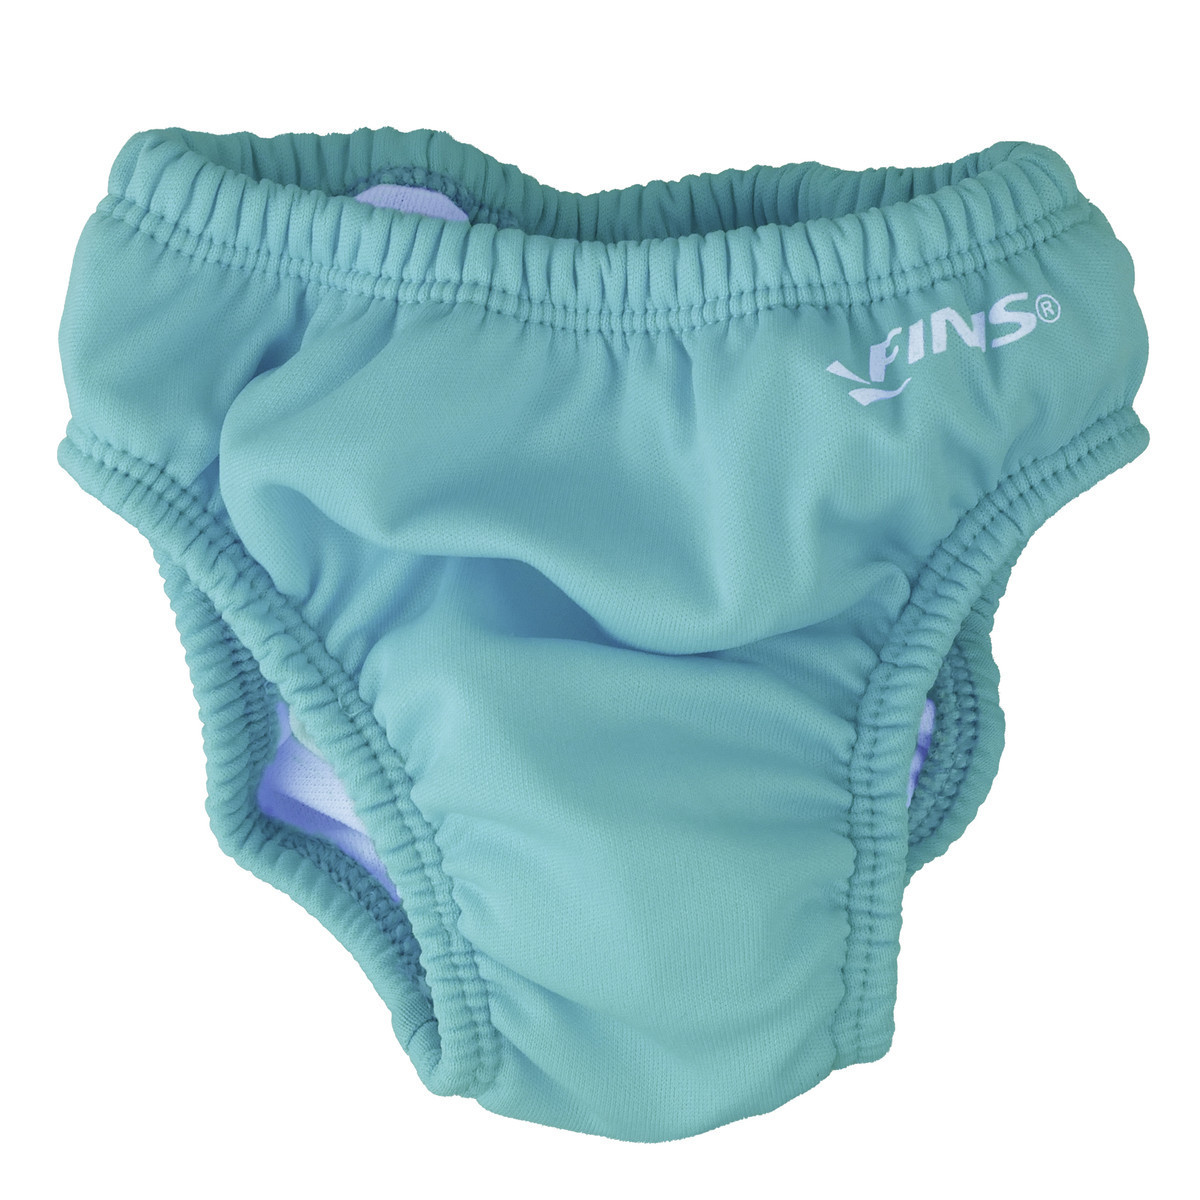 Fishbowl Blue FINIS Reusable Swim Diaper 